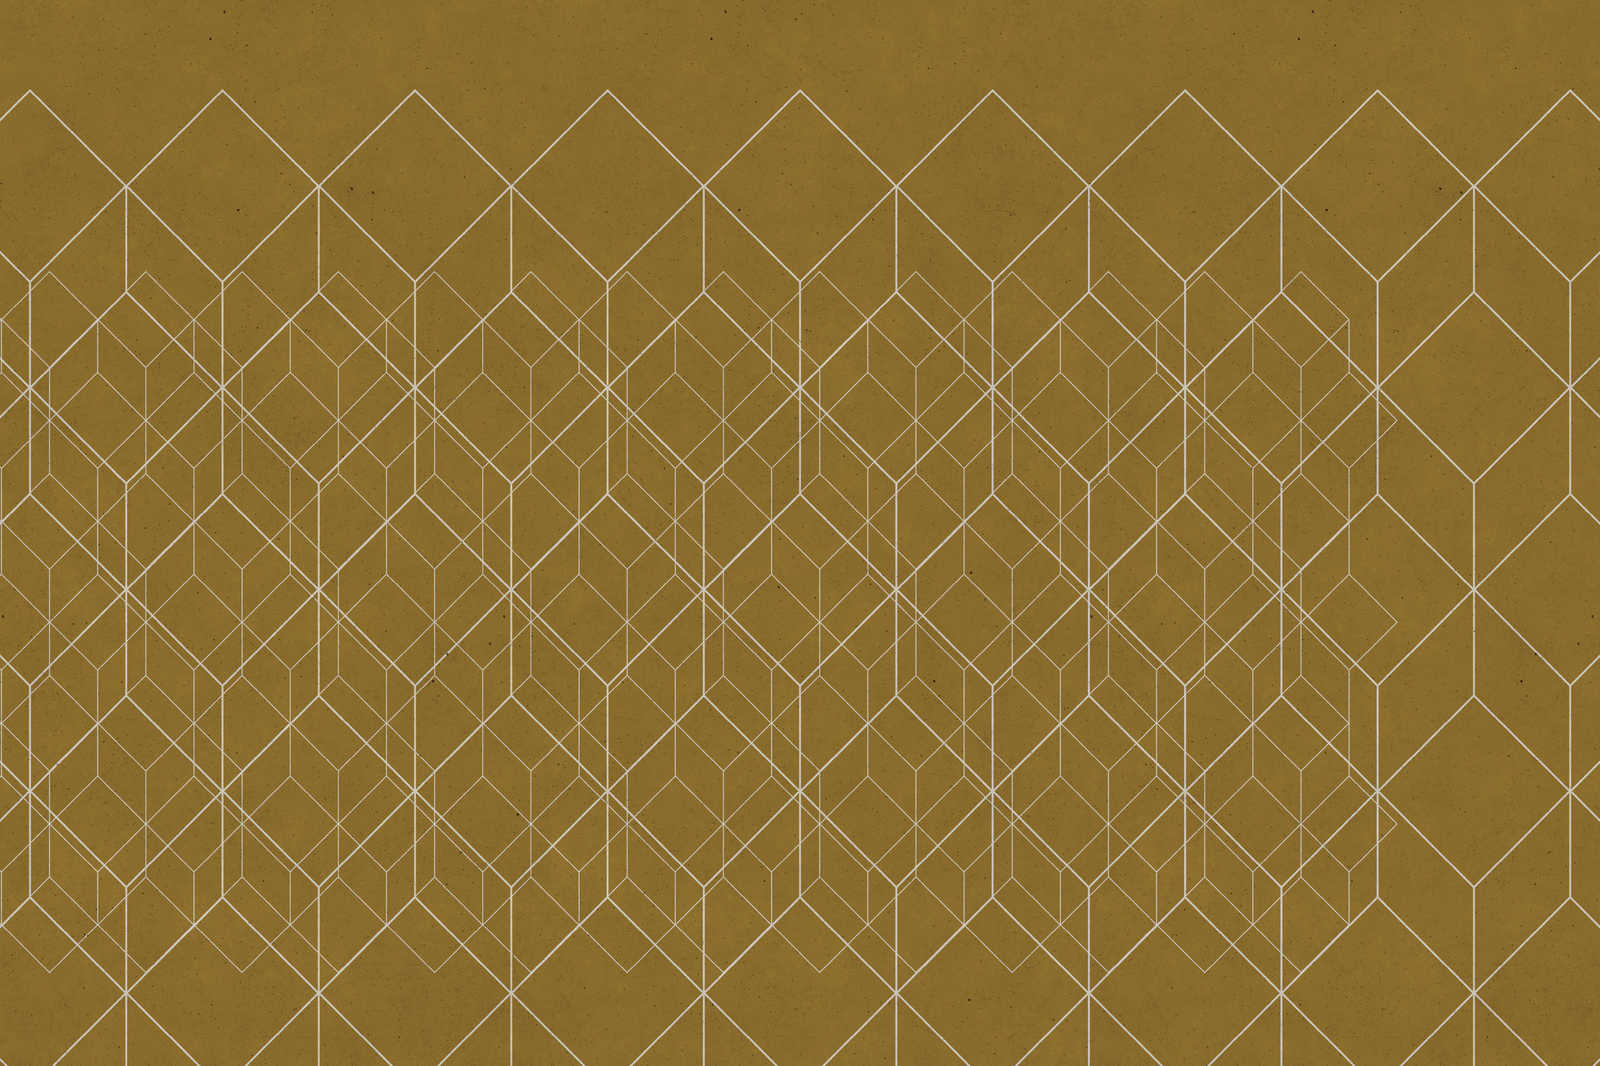             Canvas painting geometric pattern - 0,90 m x 0,60 m
        